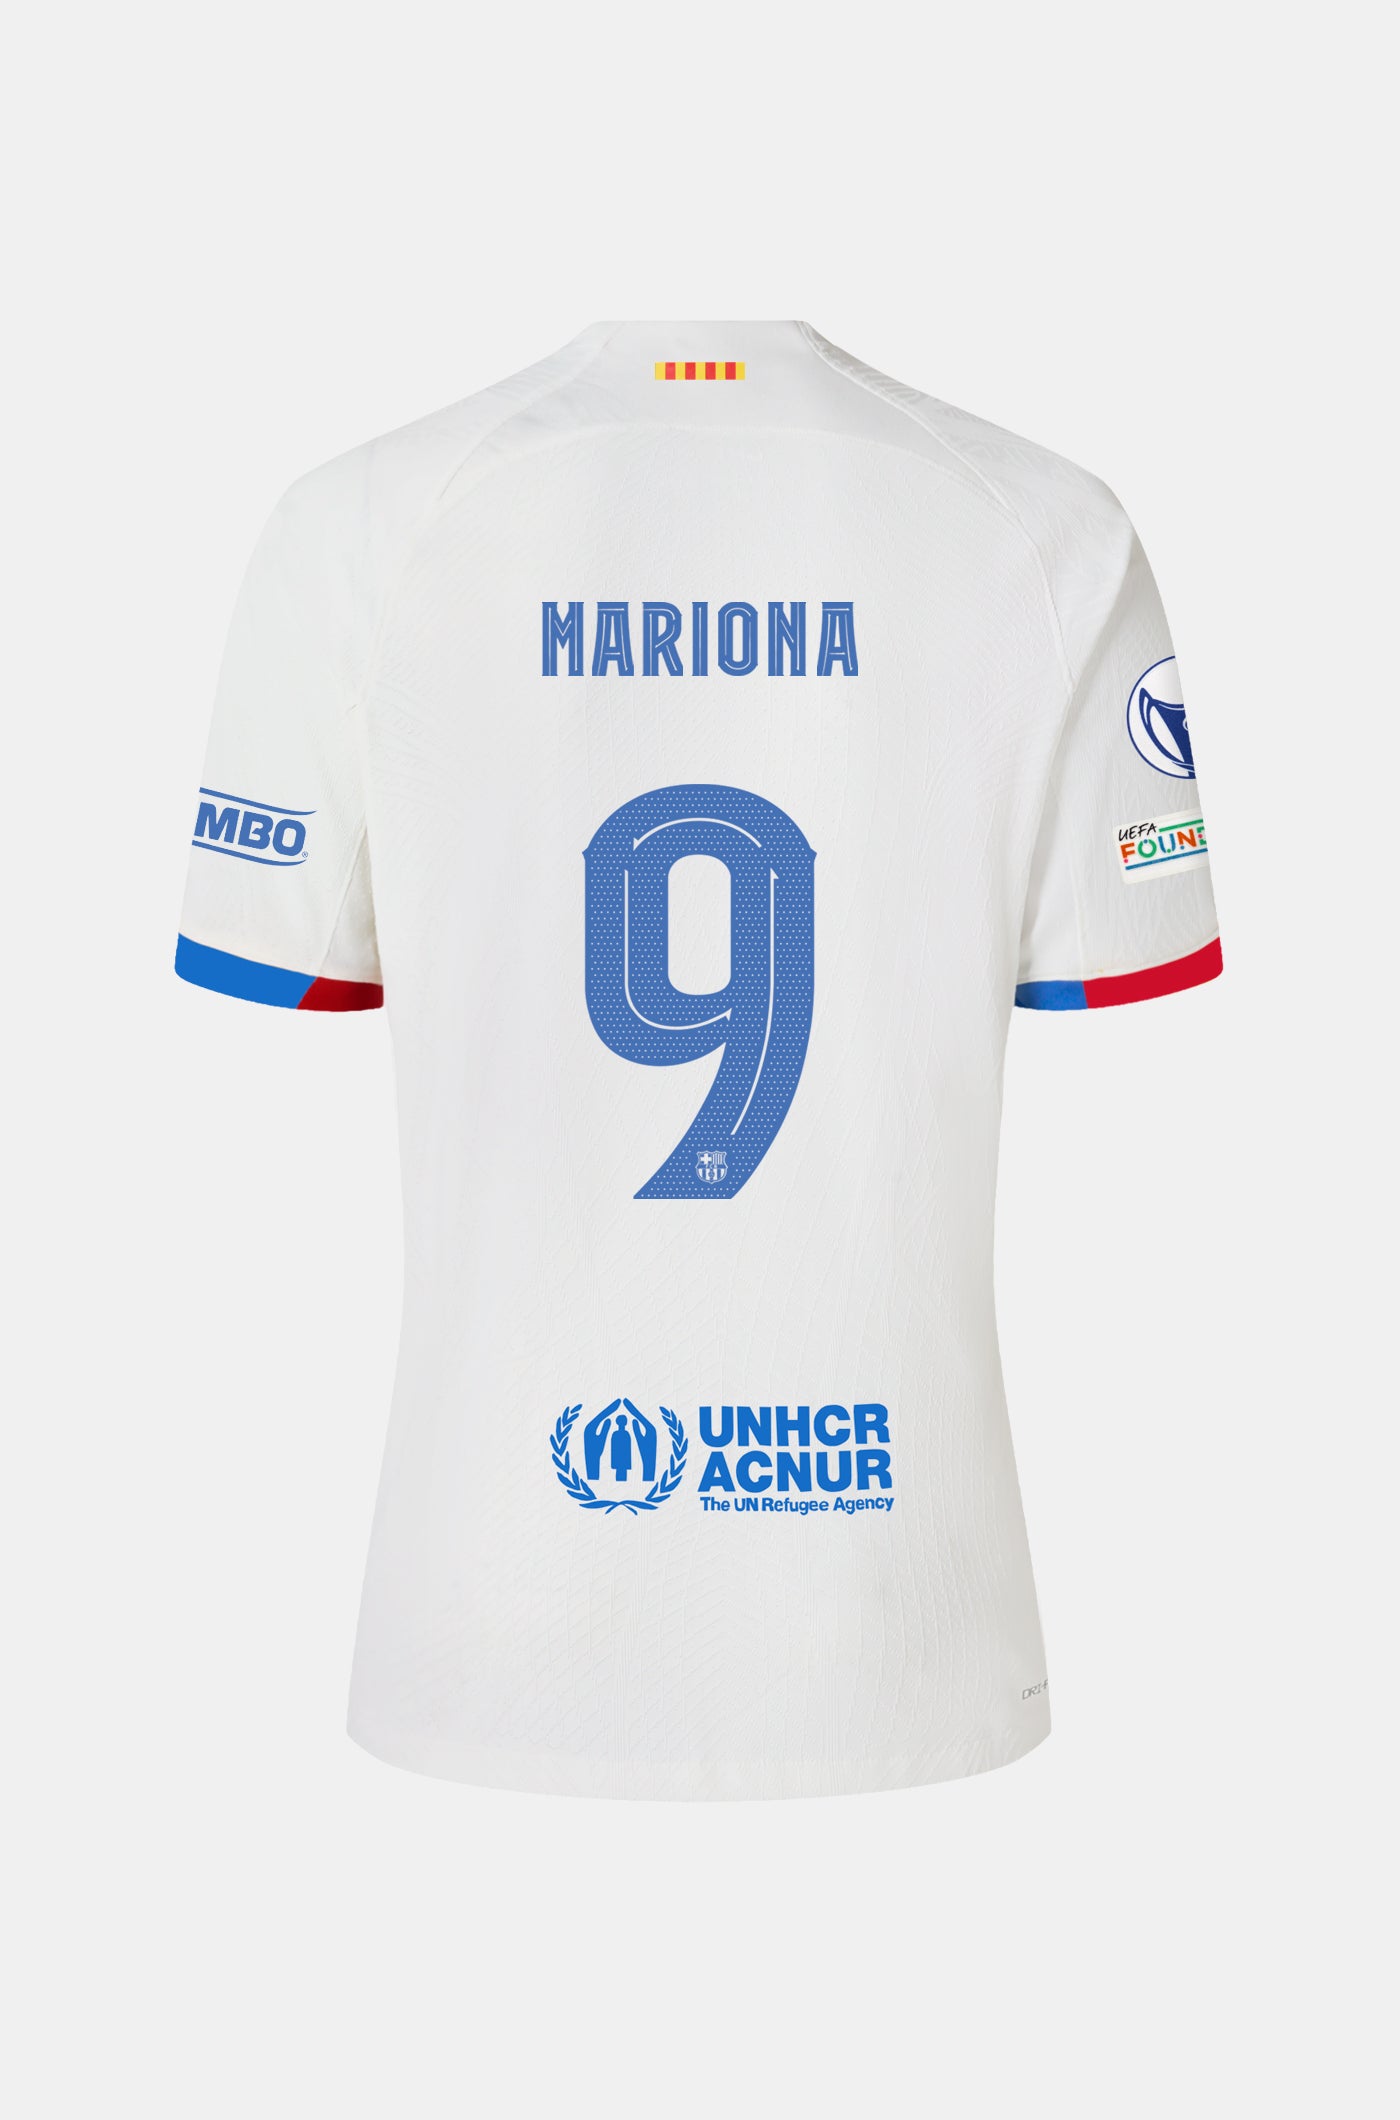 UWCL FC Barcelona Away Shirt 23/24 Player’s Edition - Women  - MARIONA